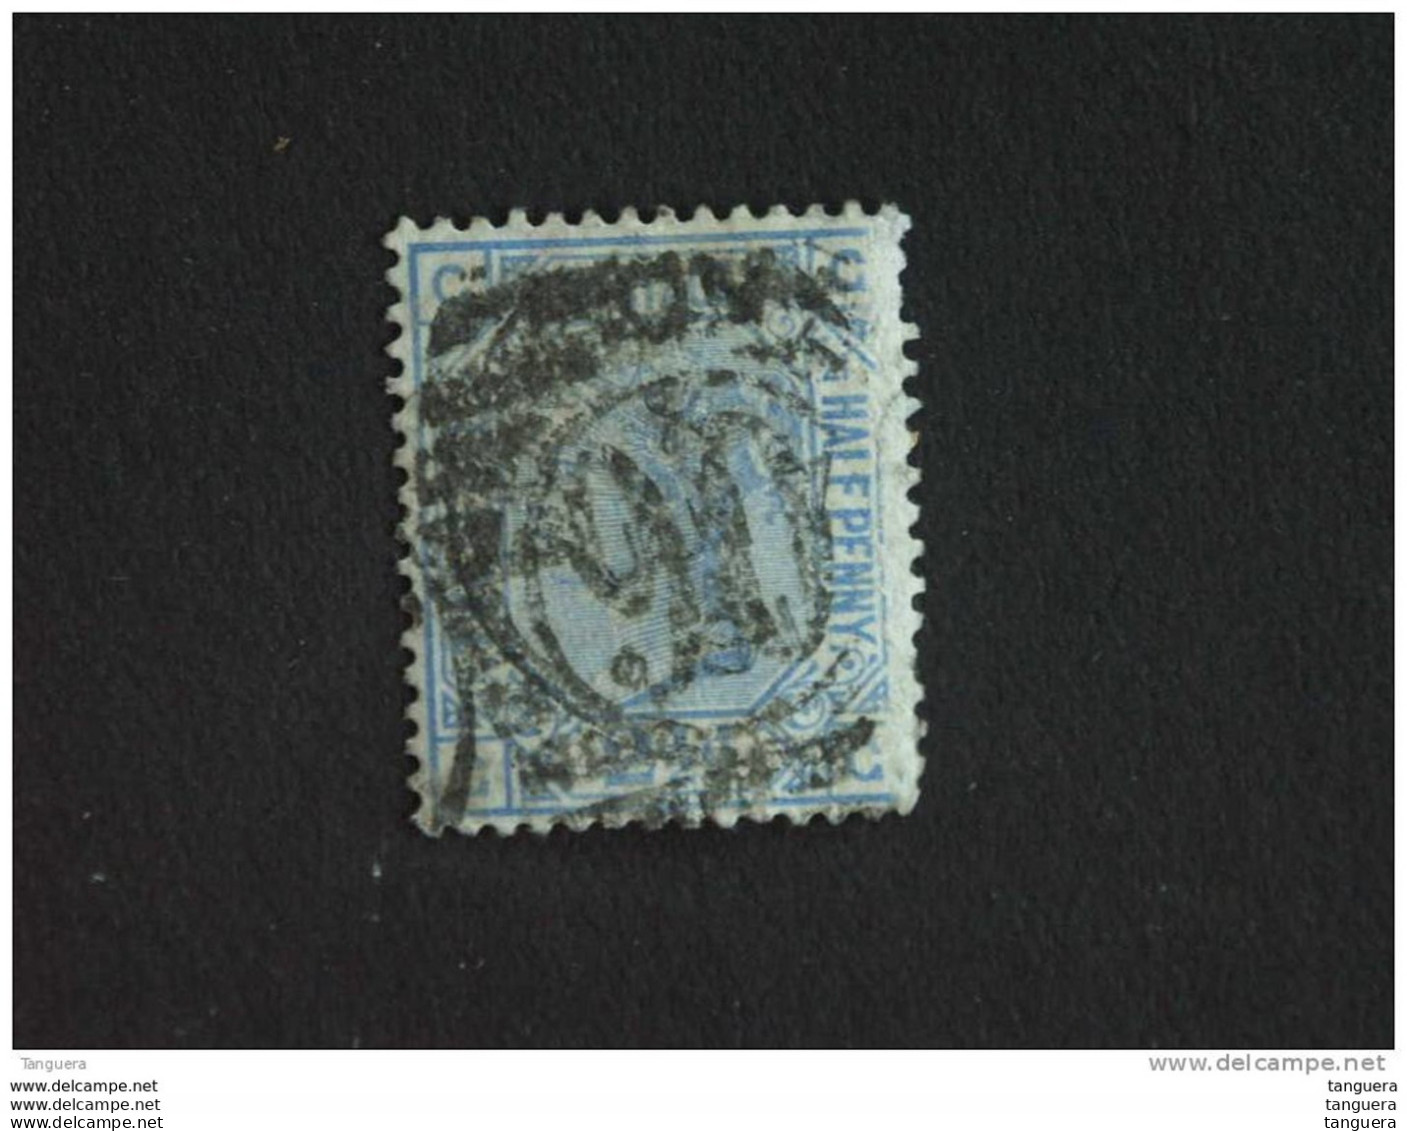 Groot Brittanië Grande-Bretagne Great Britain 1880-83 Victoria Perf. 14 Waterm Crown Yv 62 Pl 21 Déchirure Split - Used Stamps